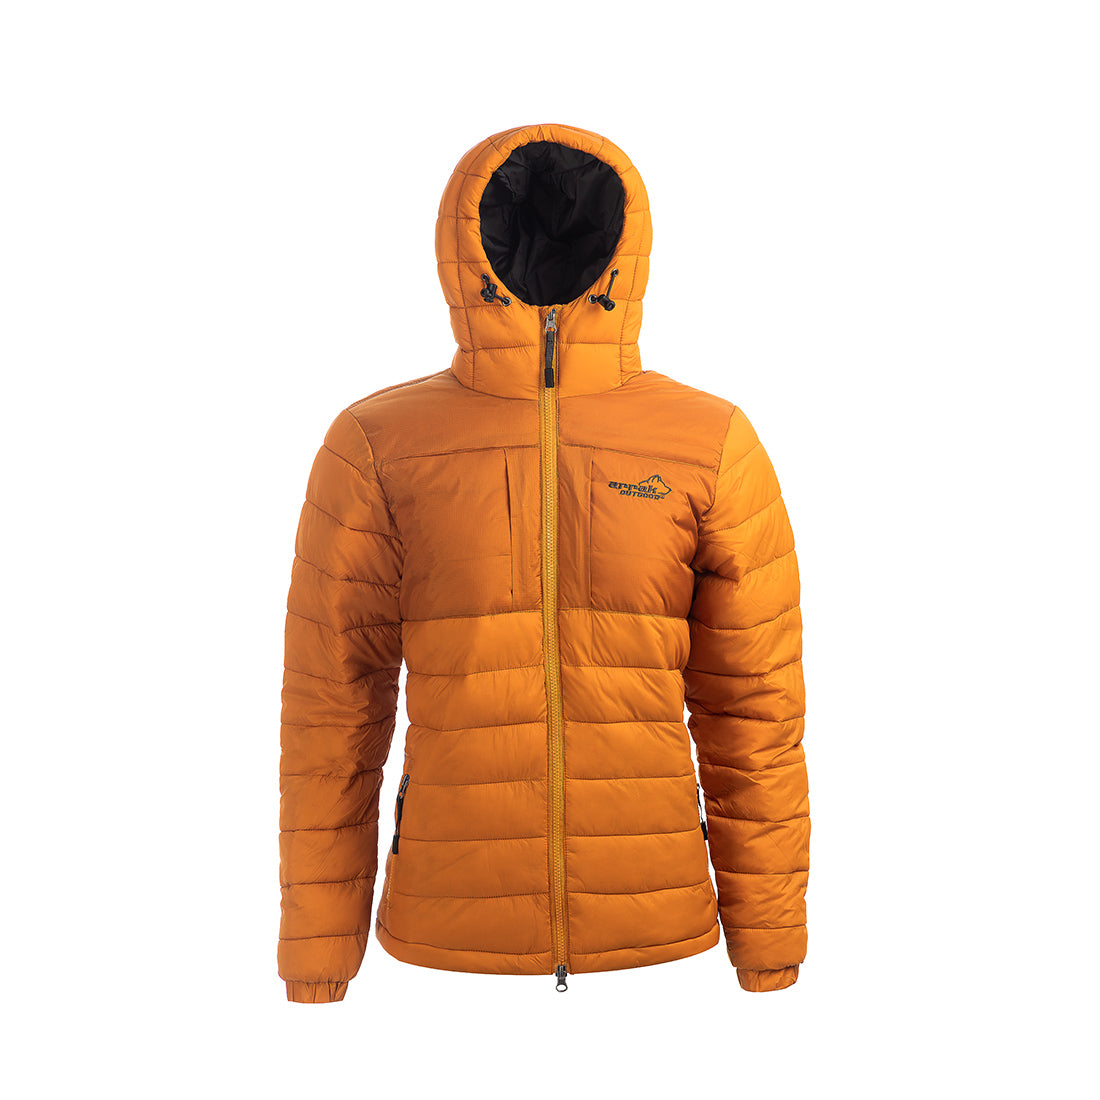 Arrak Warmy Jacket Women - orange